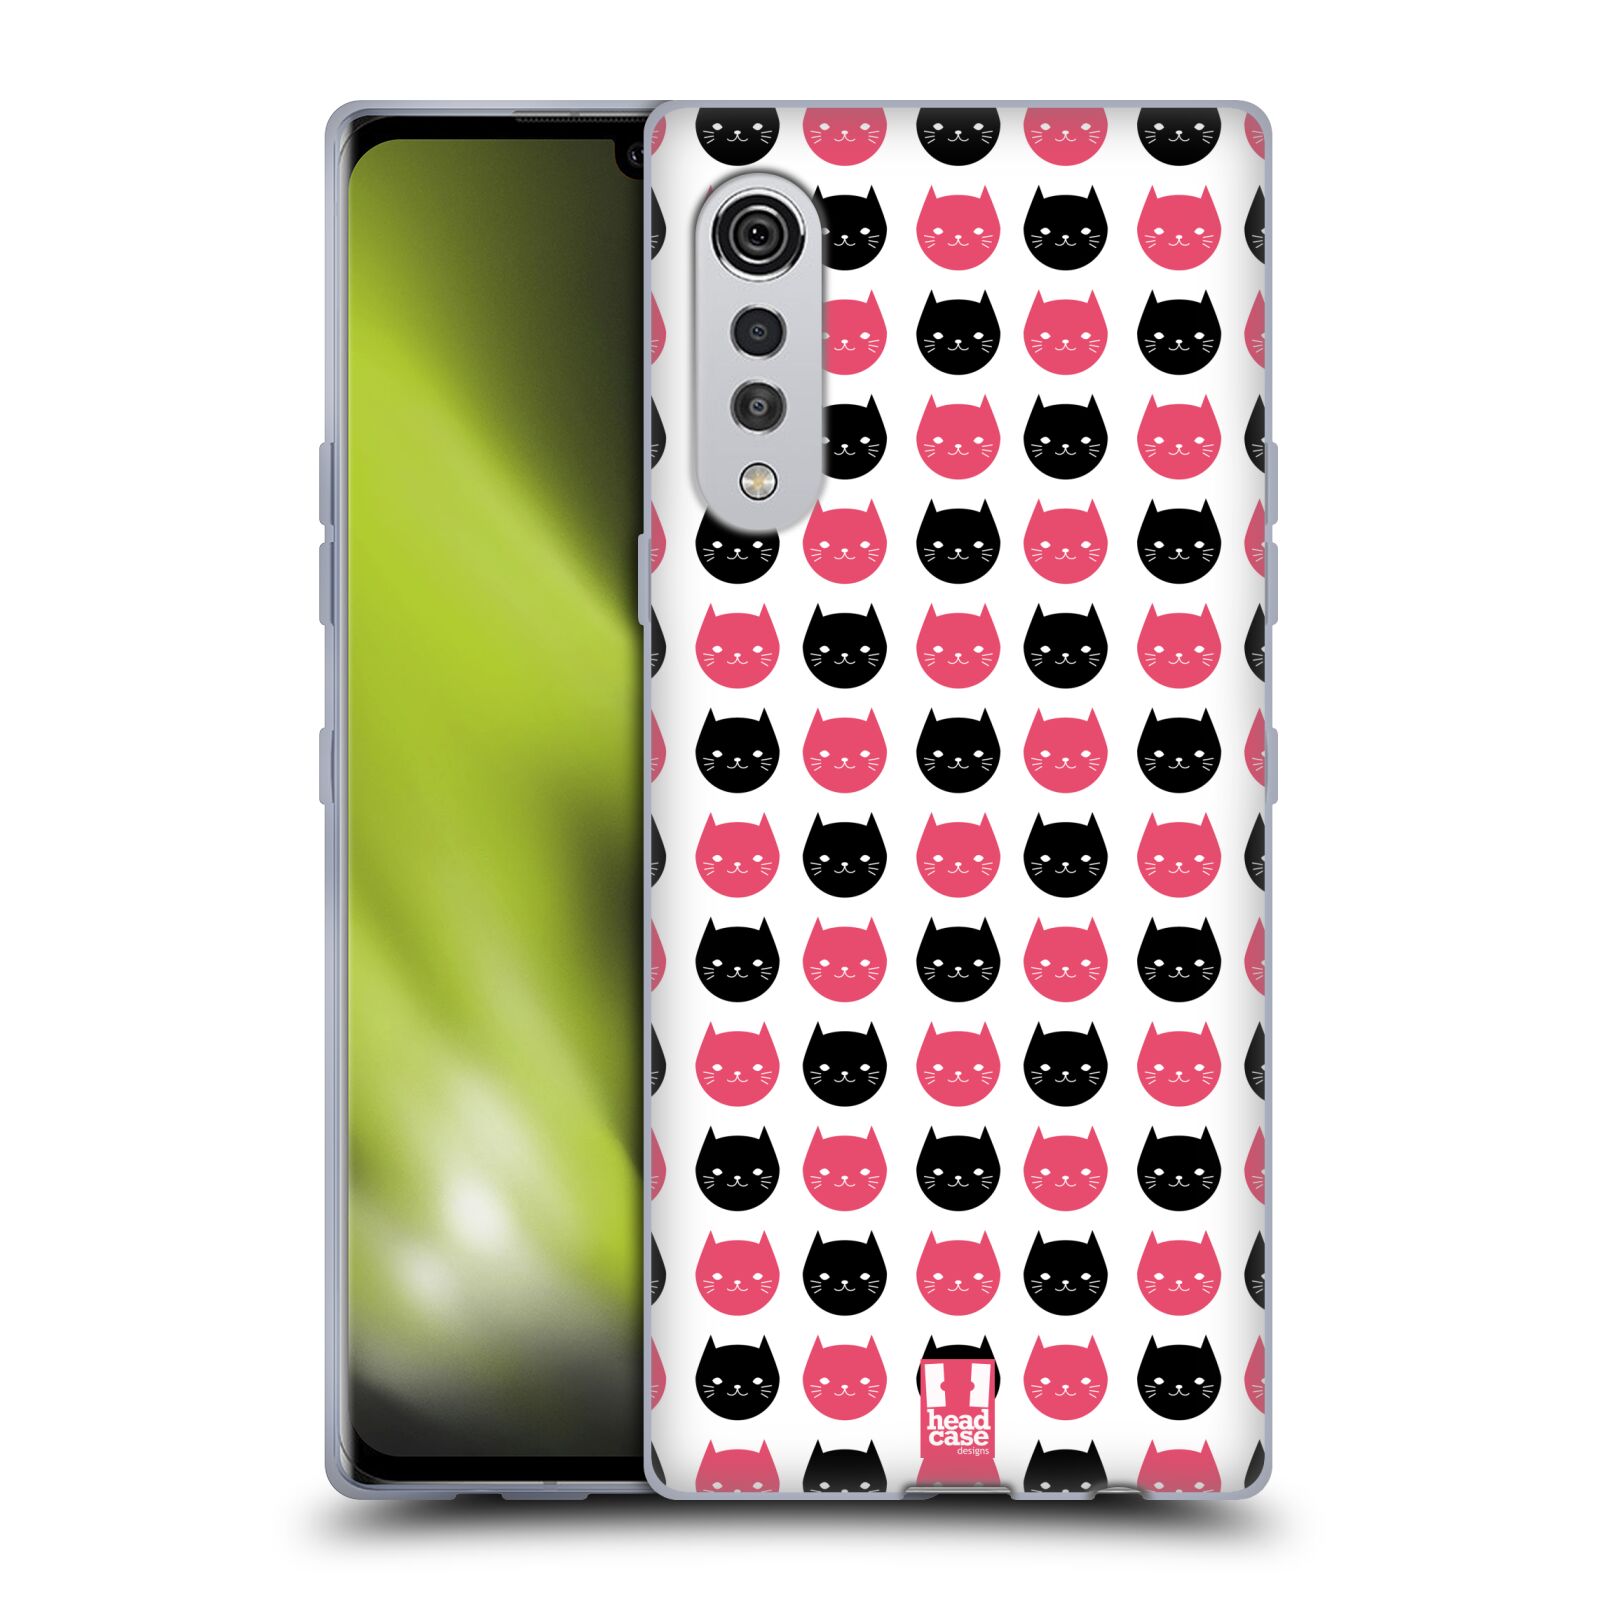 Silikonové pouzdro na mobil LG Velvet - Head Case - KOČKY Black and Pink